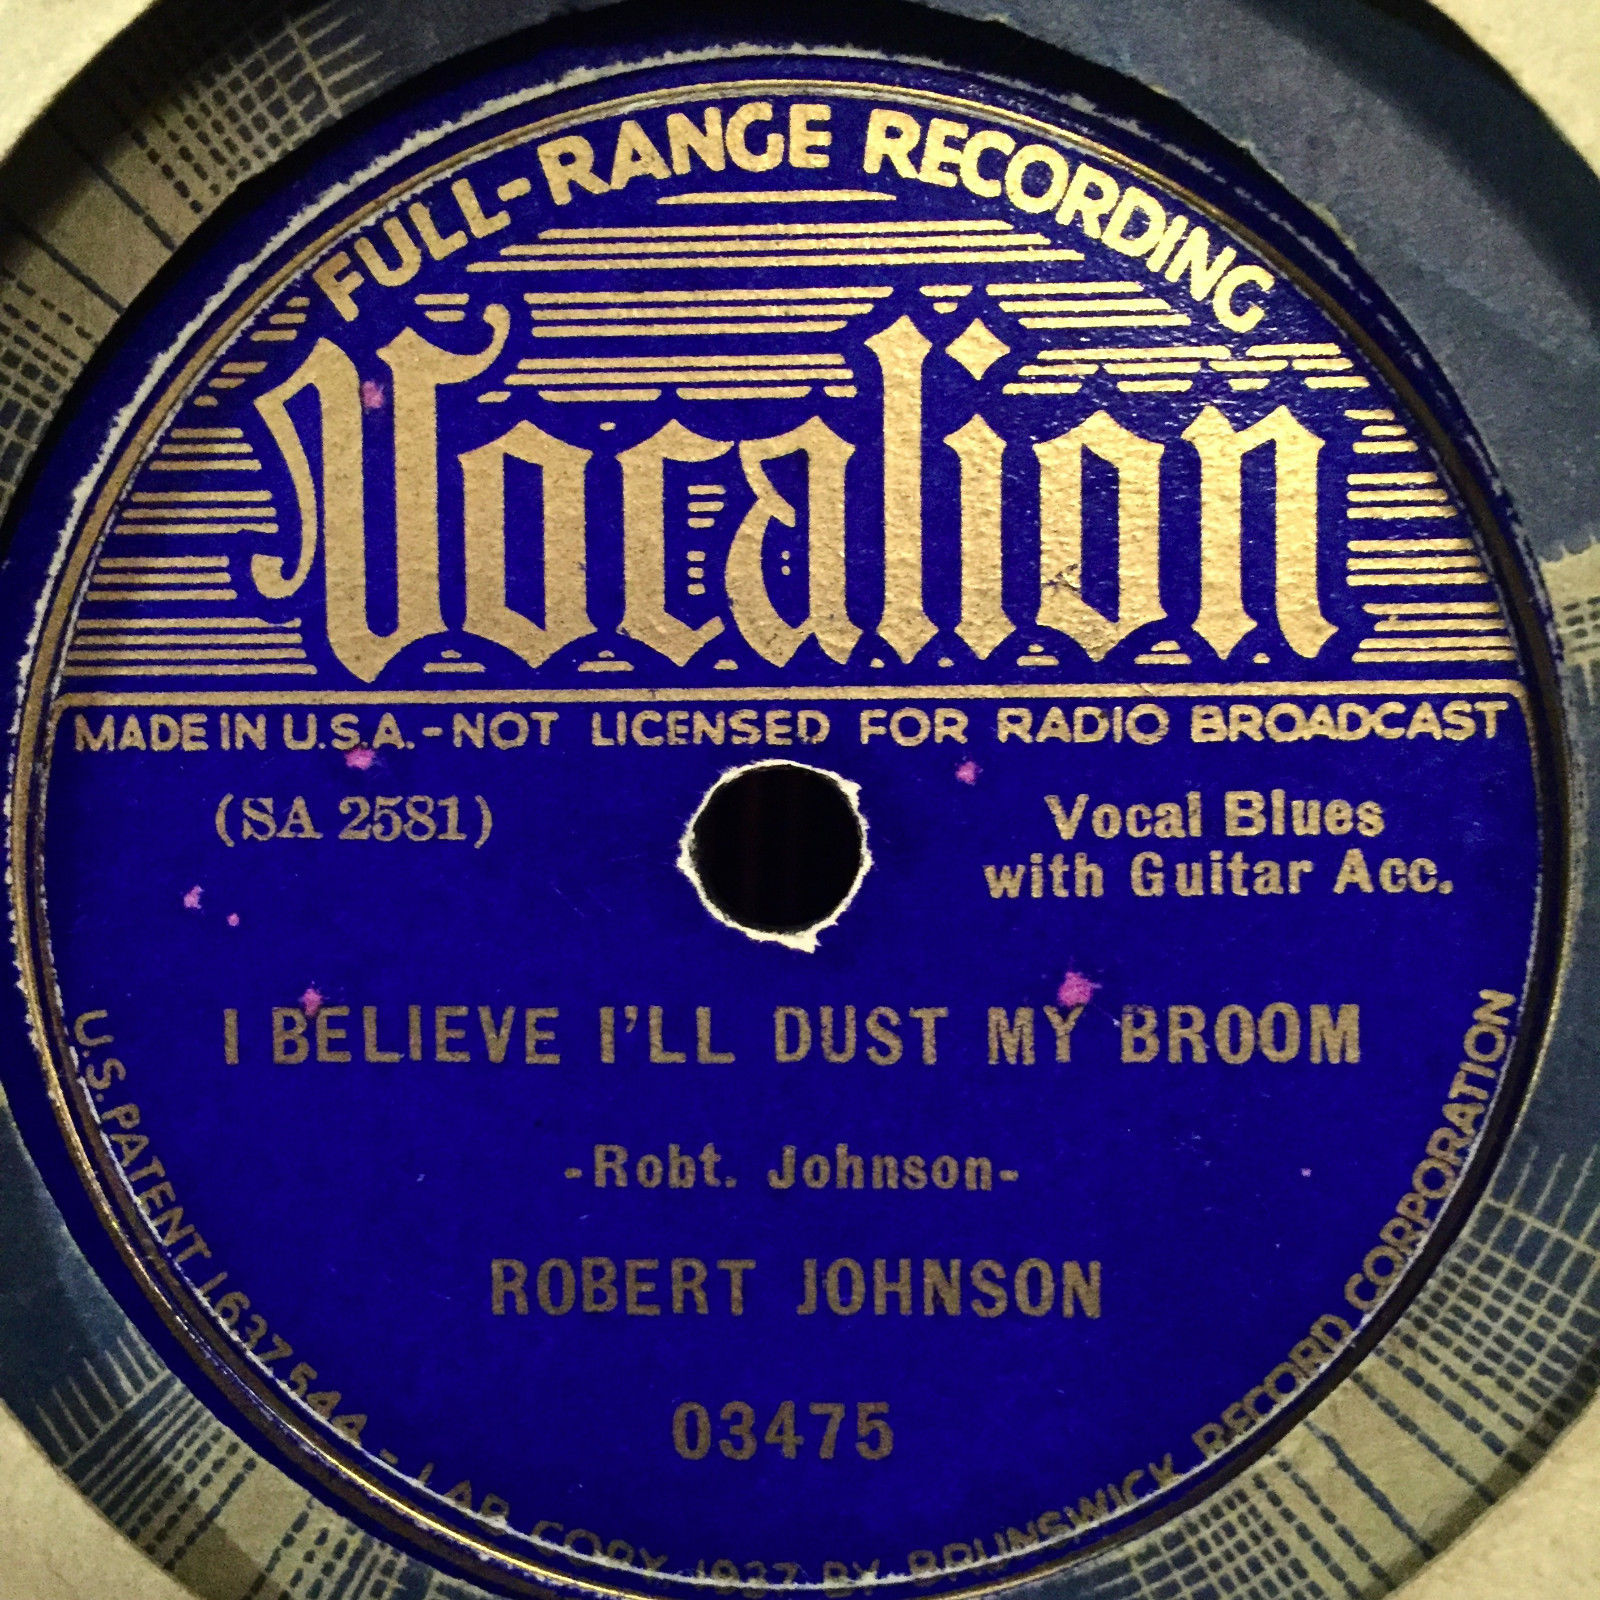 ROBERT JOHNSON VOCALION 03475 BLUES 78 RPM E/E- "I BELIEVE I'LL DUST MY BROOM"